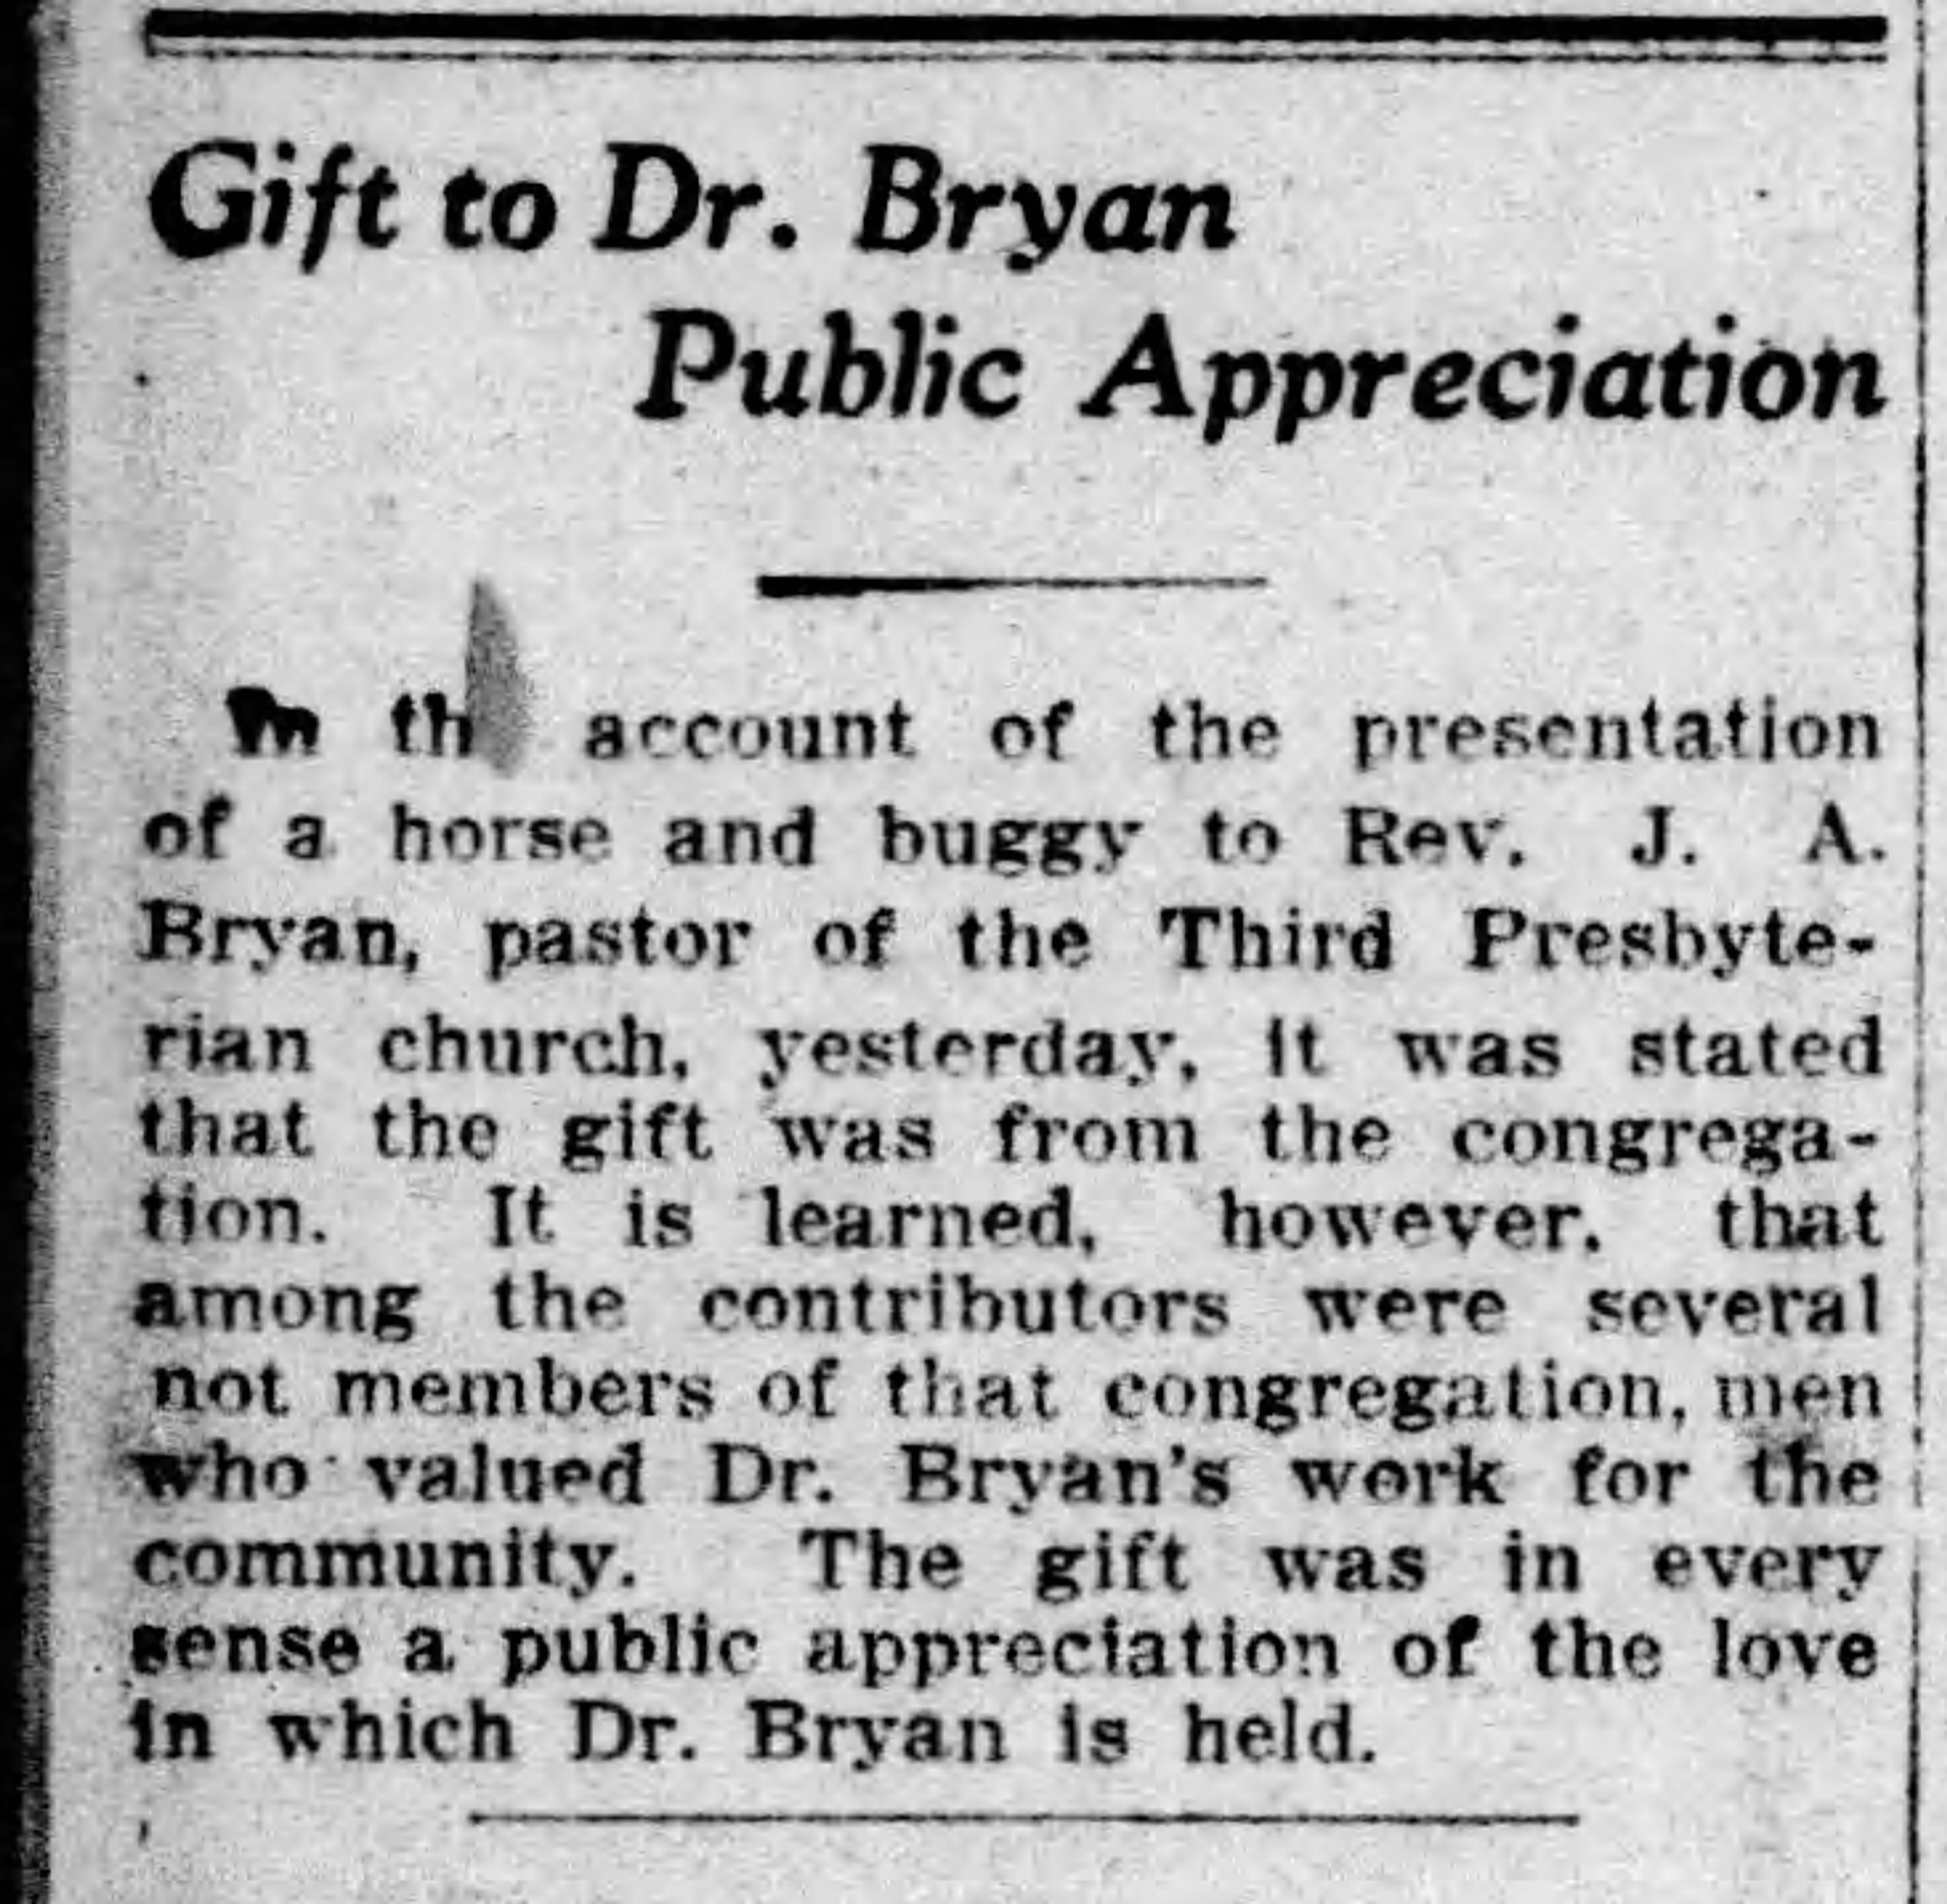 Gift to Dr. Bryan a Public Appreciation